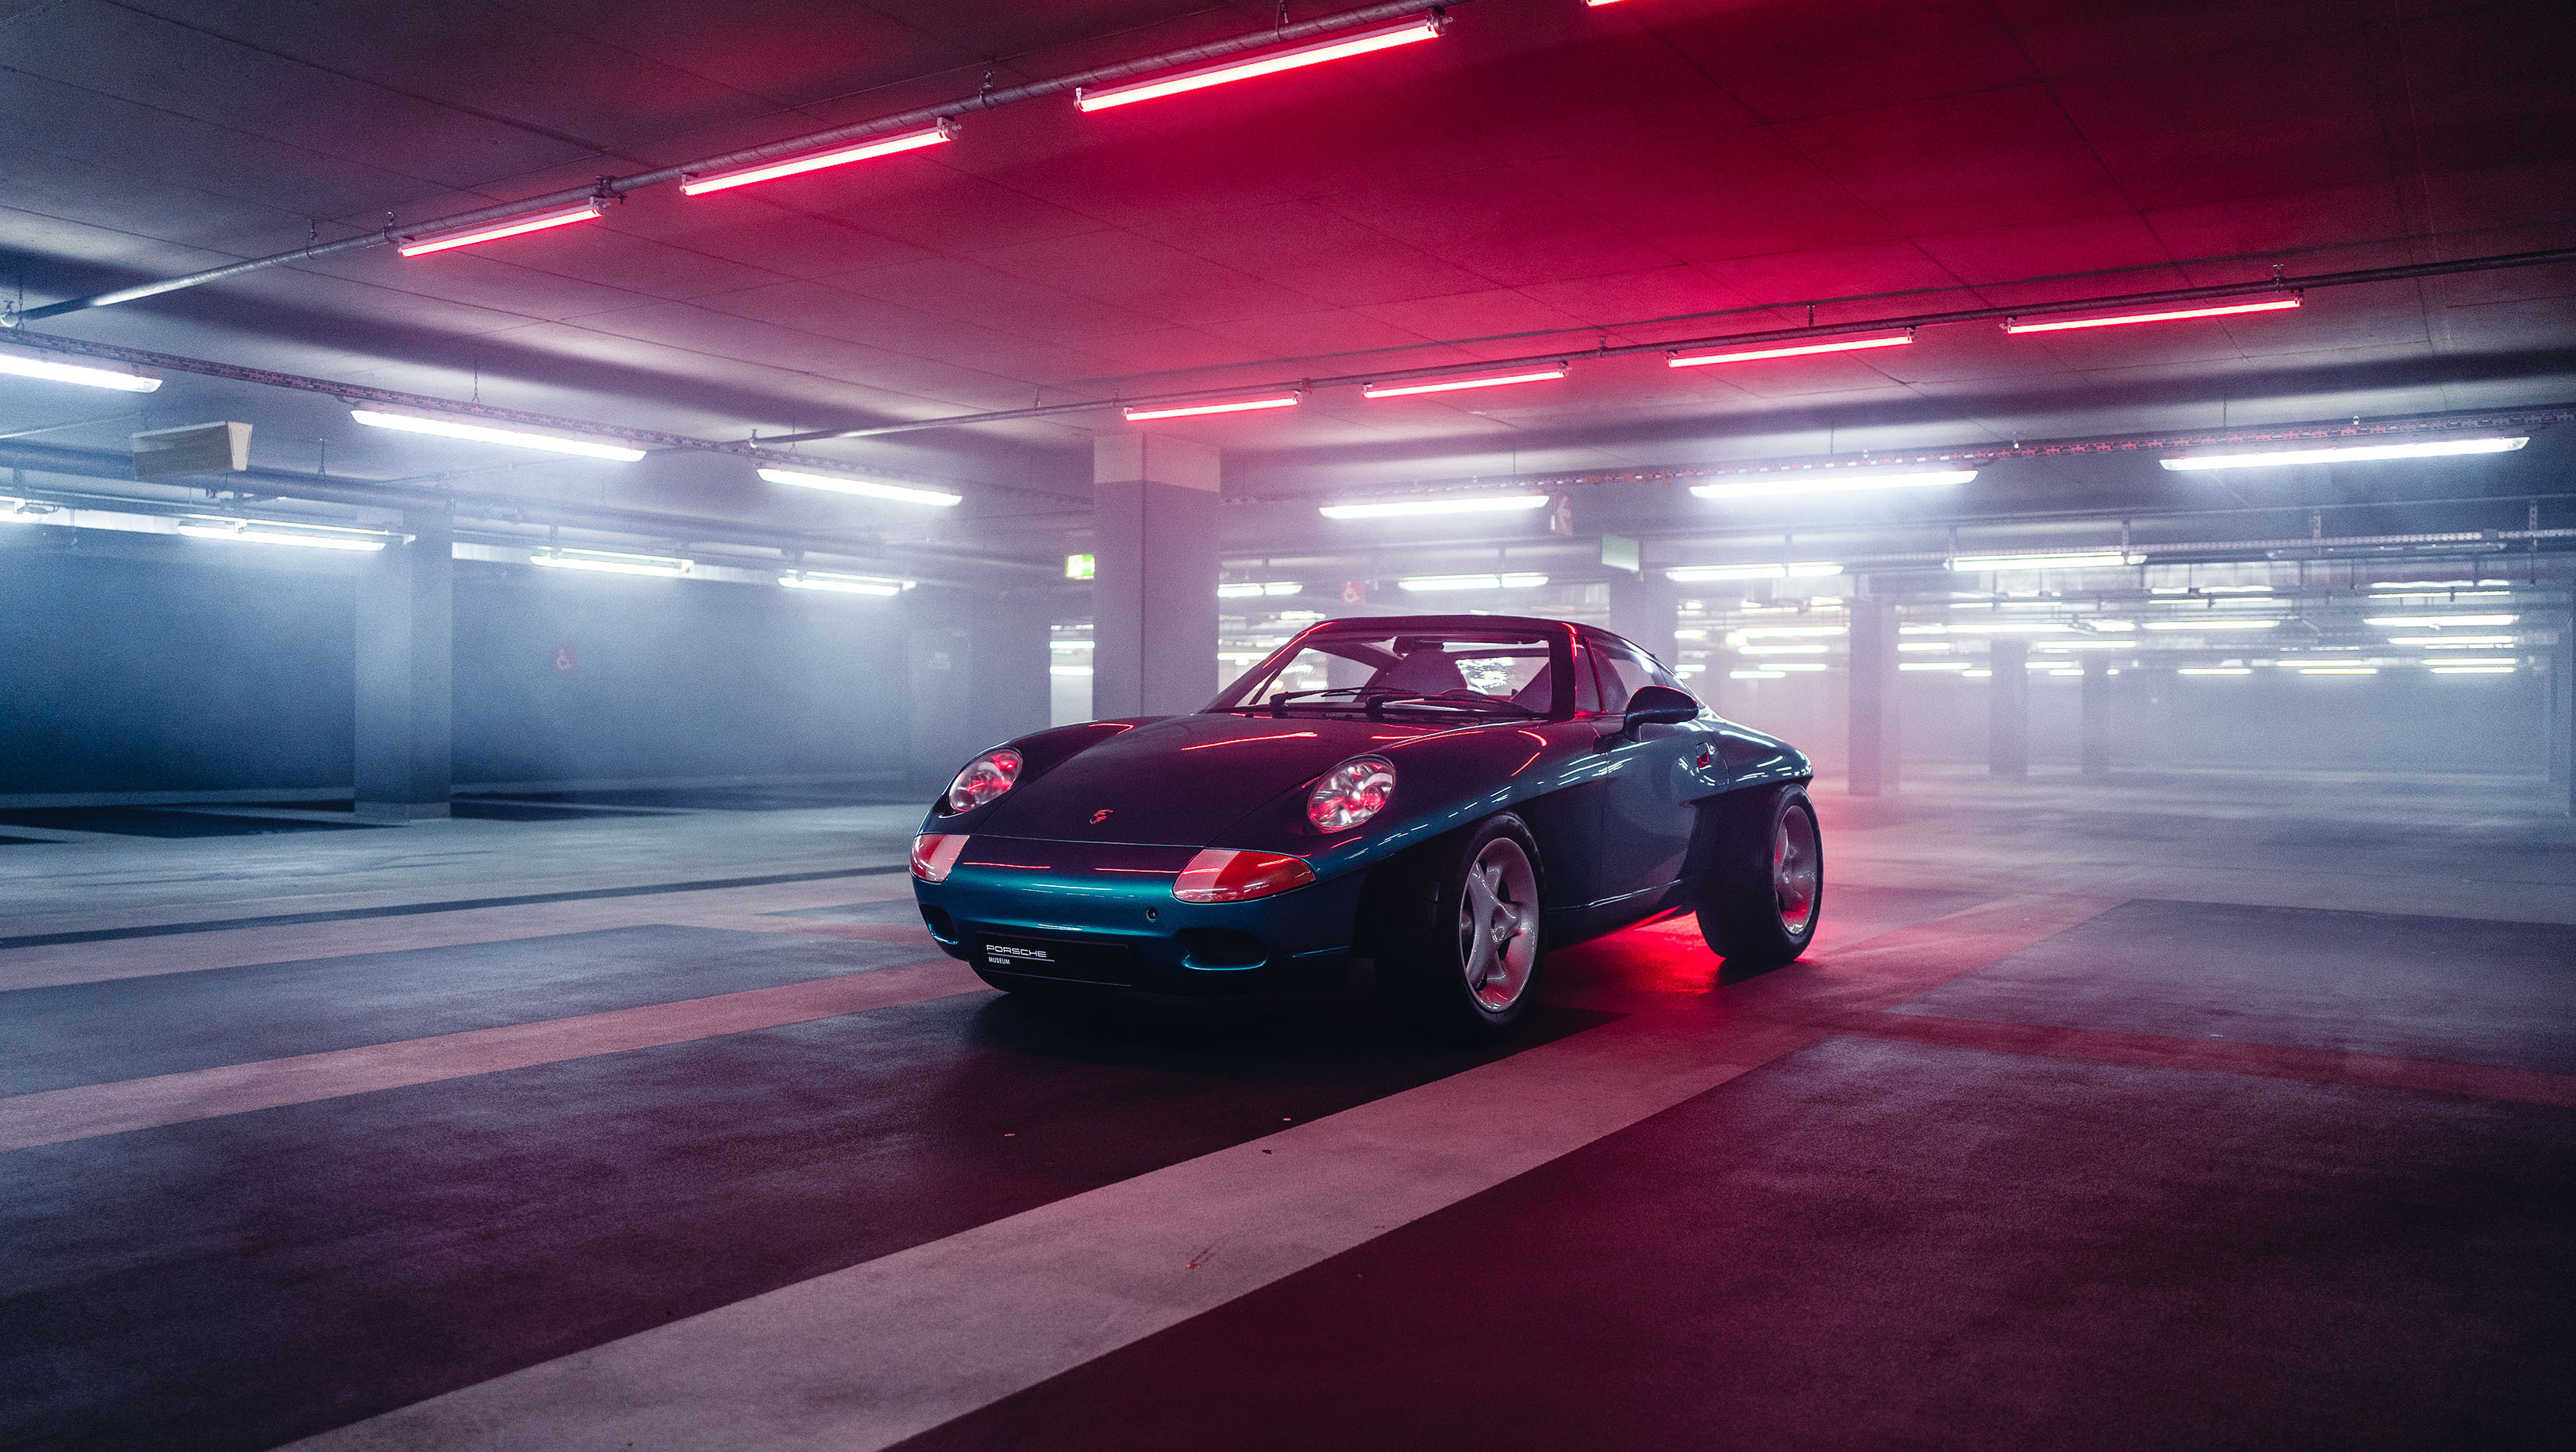 Porsche Panamericana concept car in underground car park